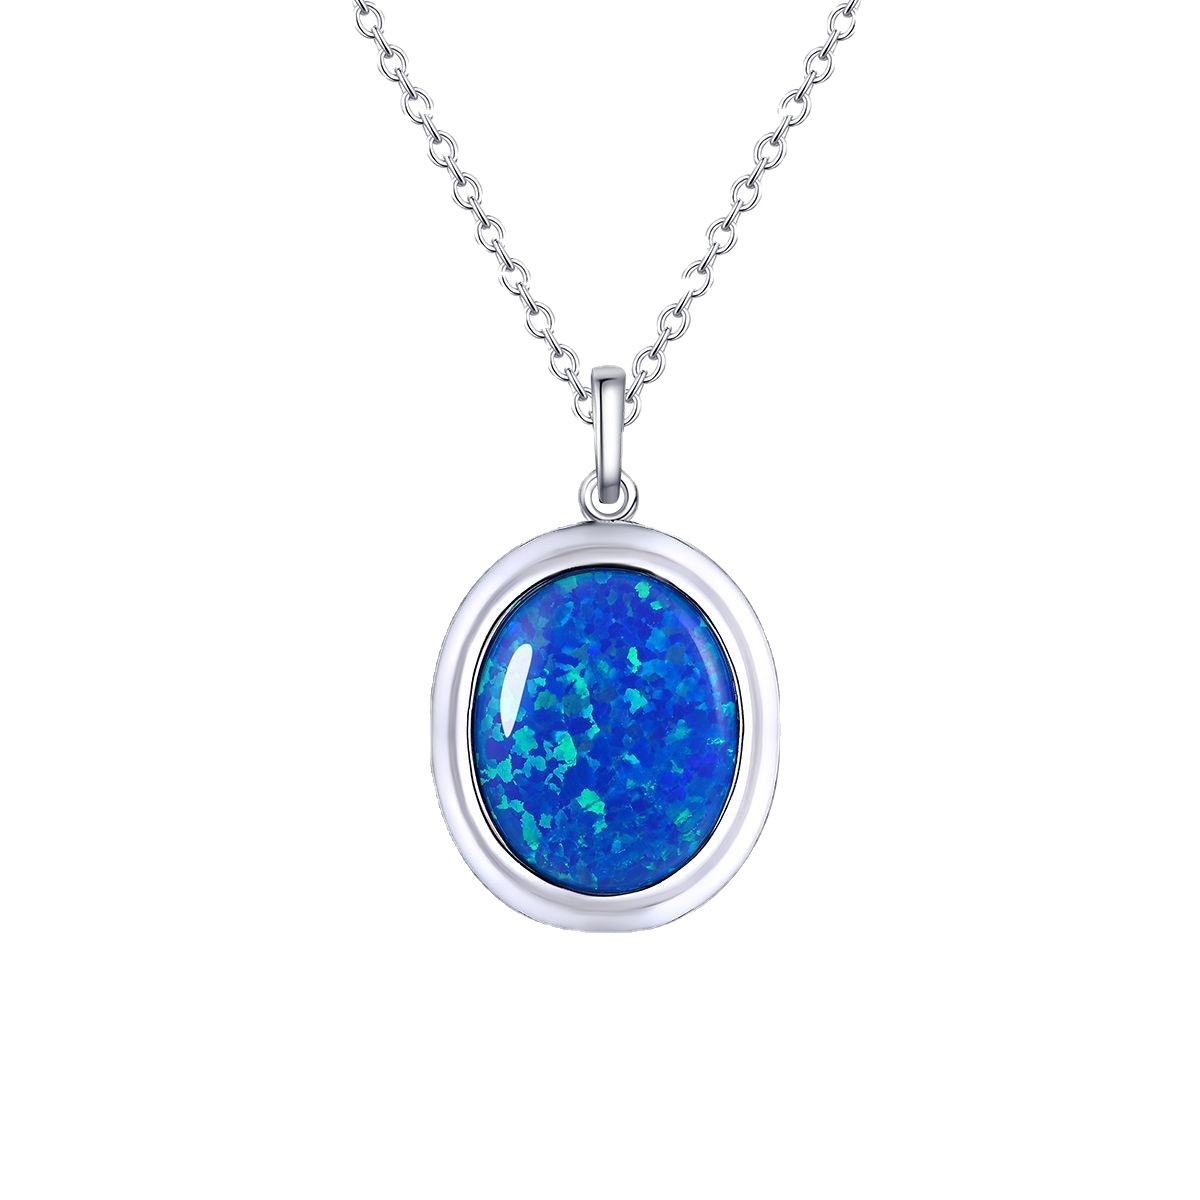 1:Blue Opal